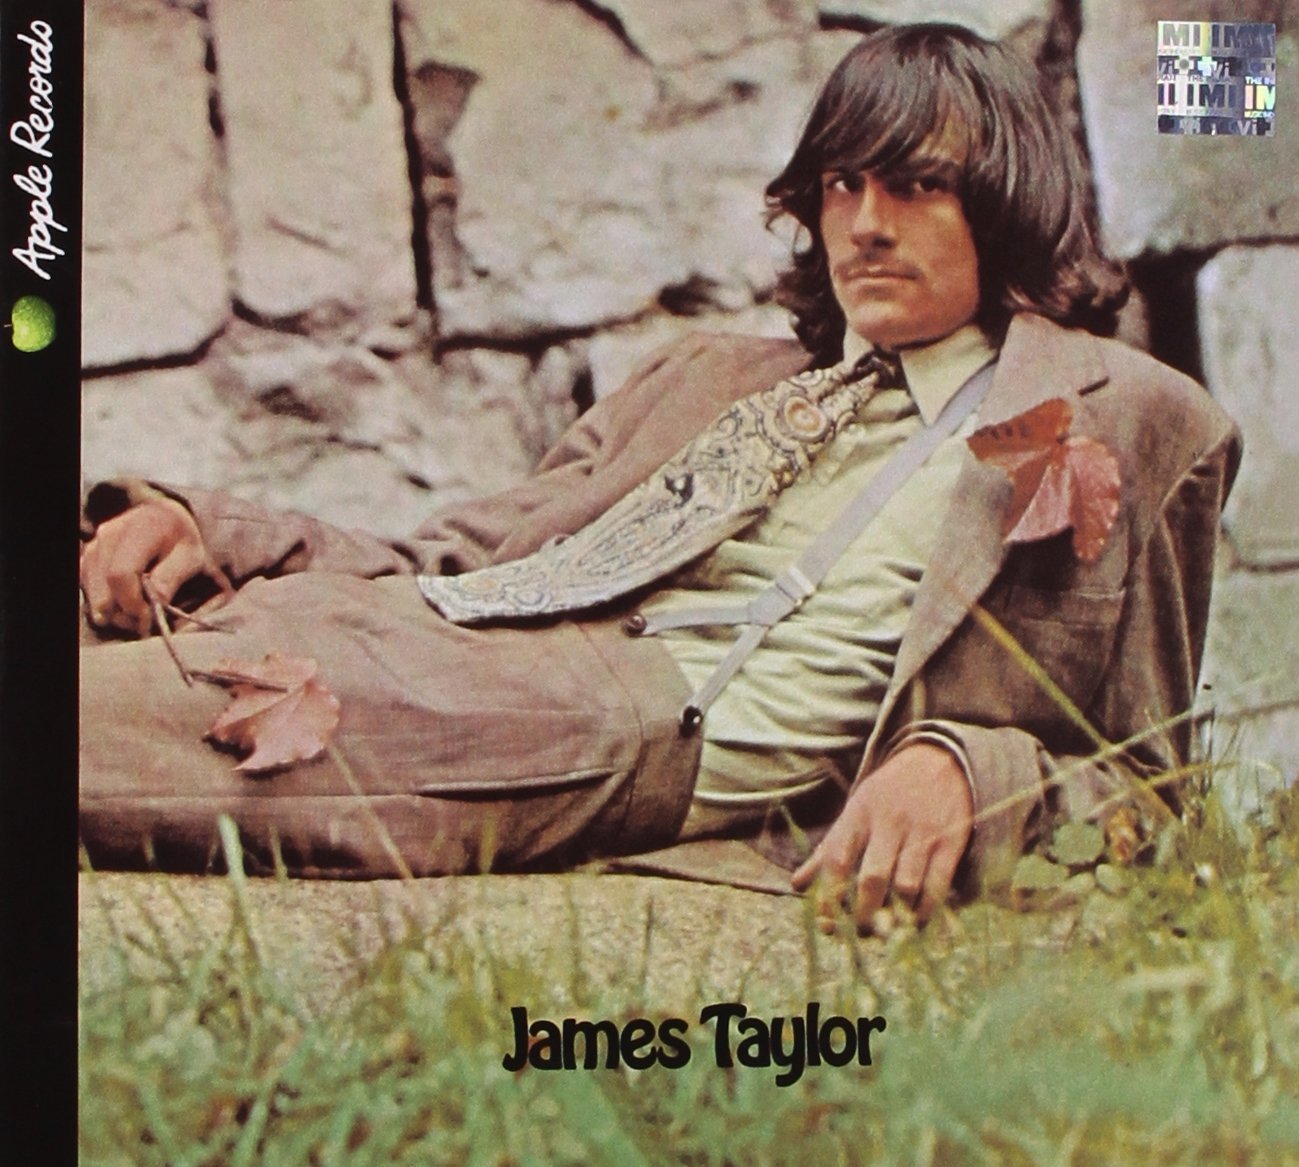 James Taylor - Debut Album